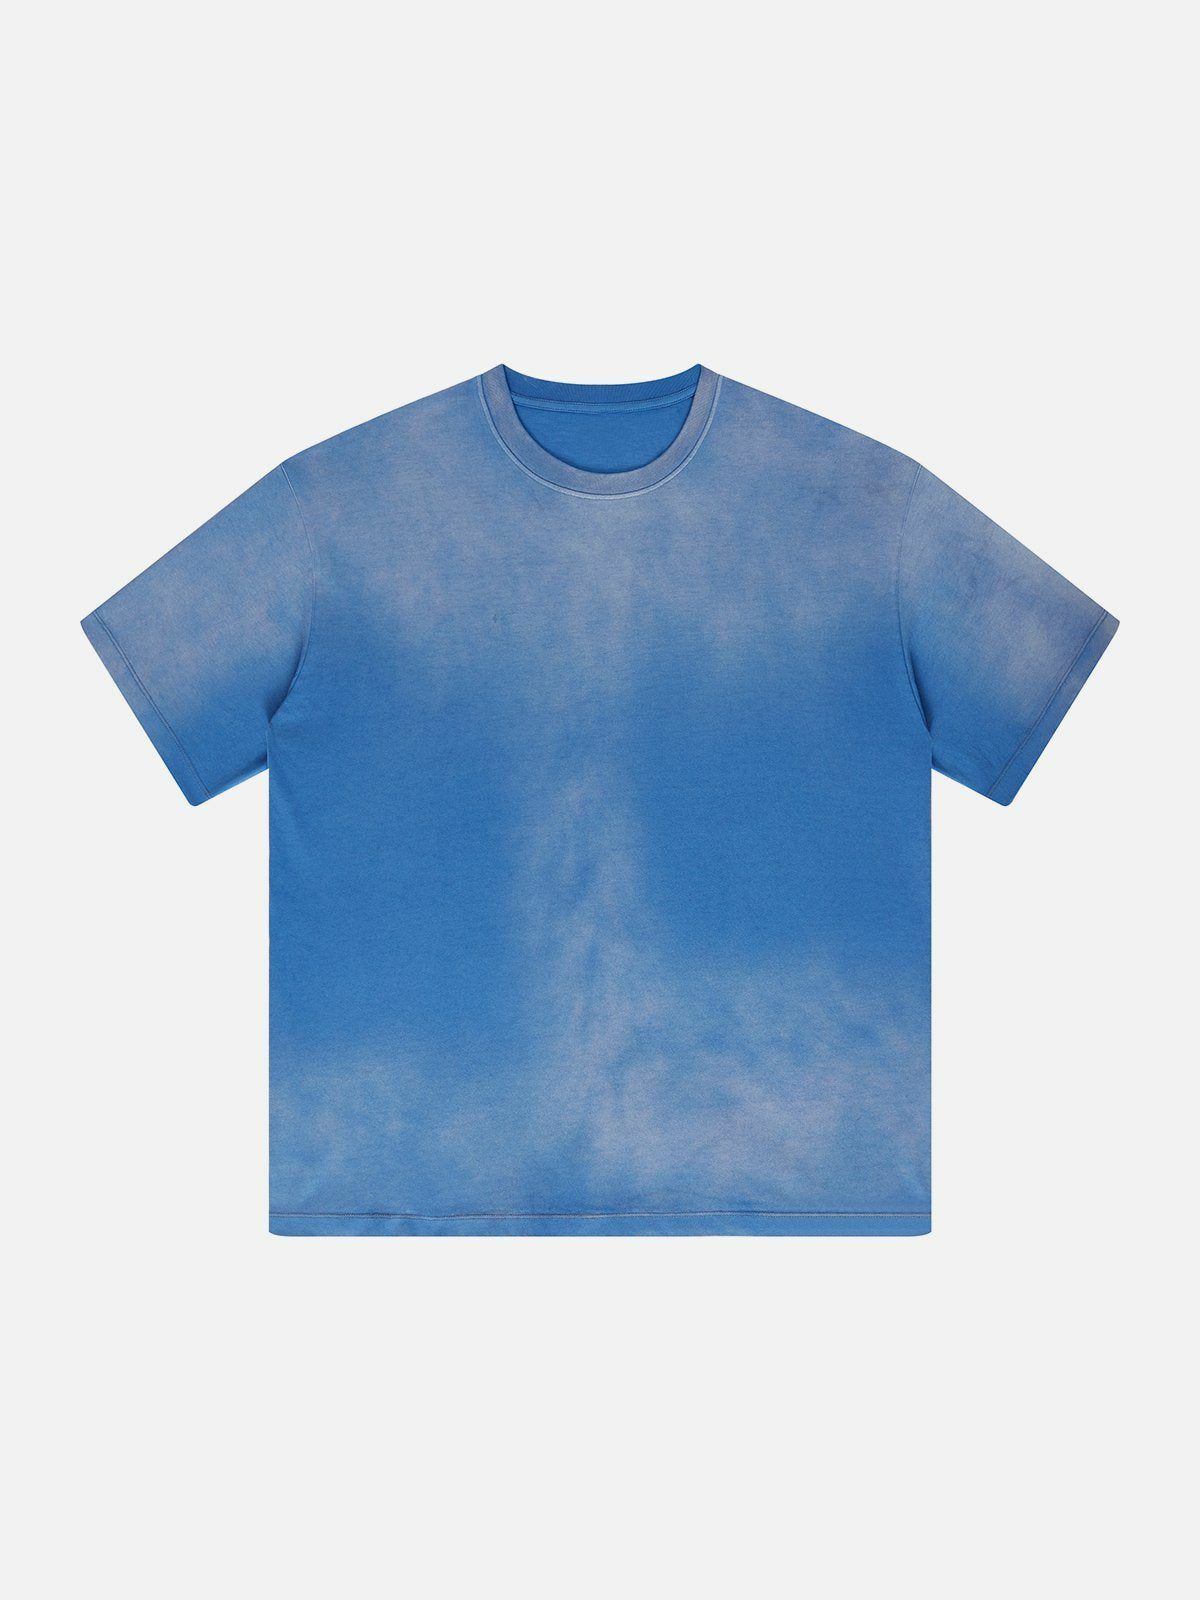 vibrant streetwear tee youthful  retro cotton shirt 4039